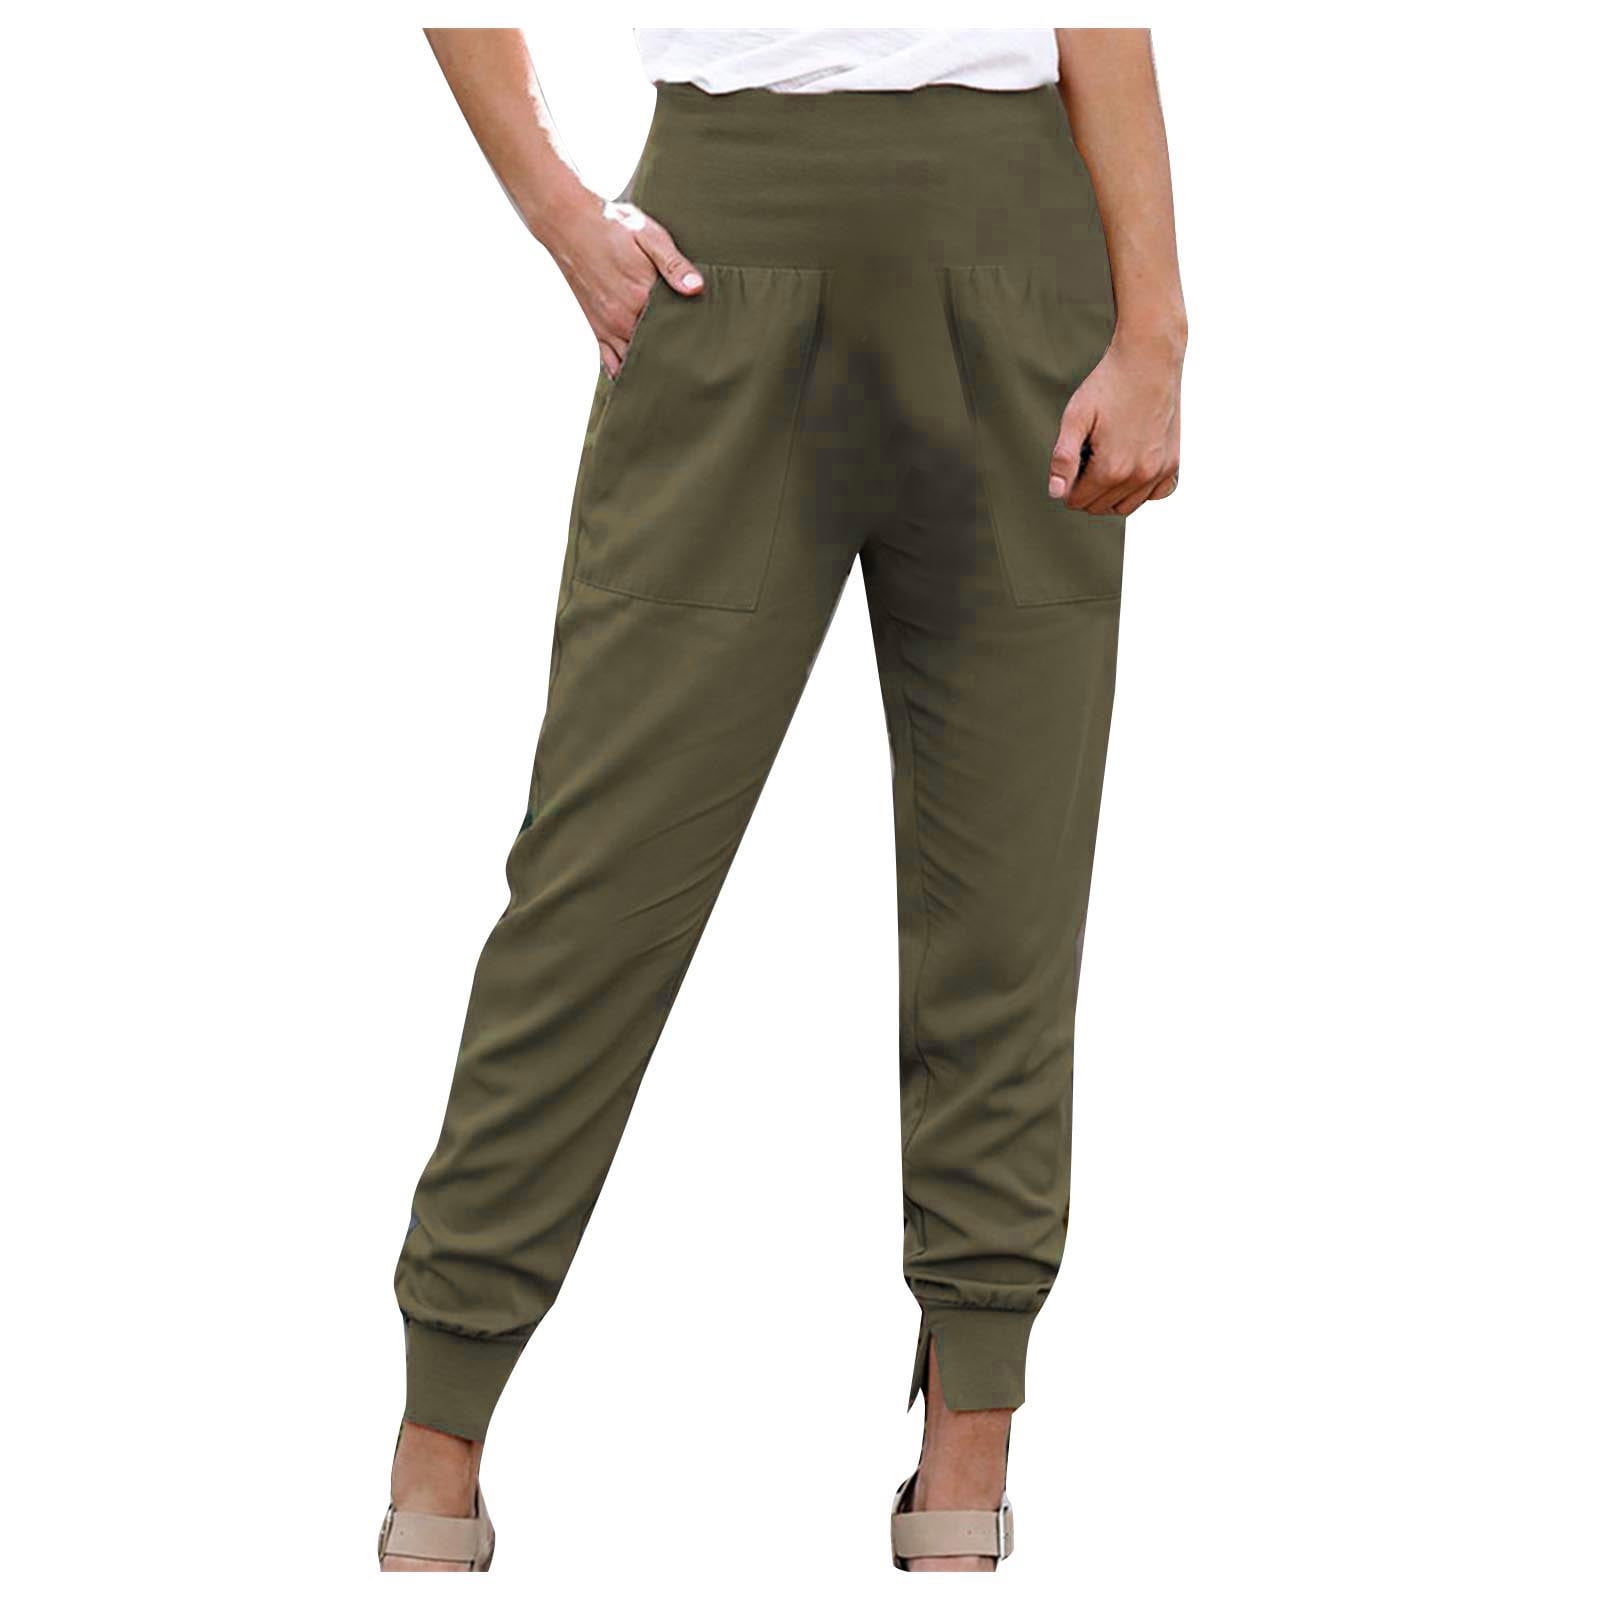 Hfyihgf Women's Jogger Pants High Waisted Sweatpants with Pockets